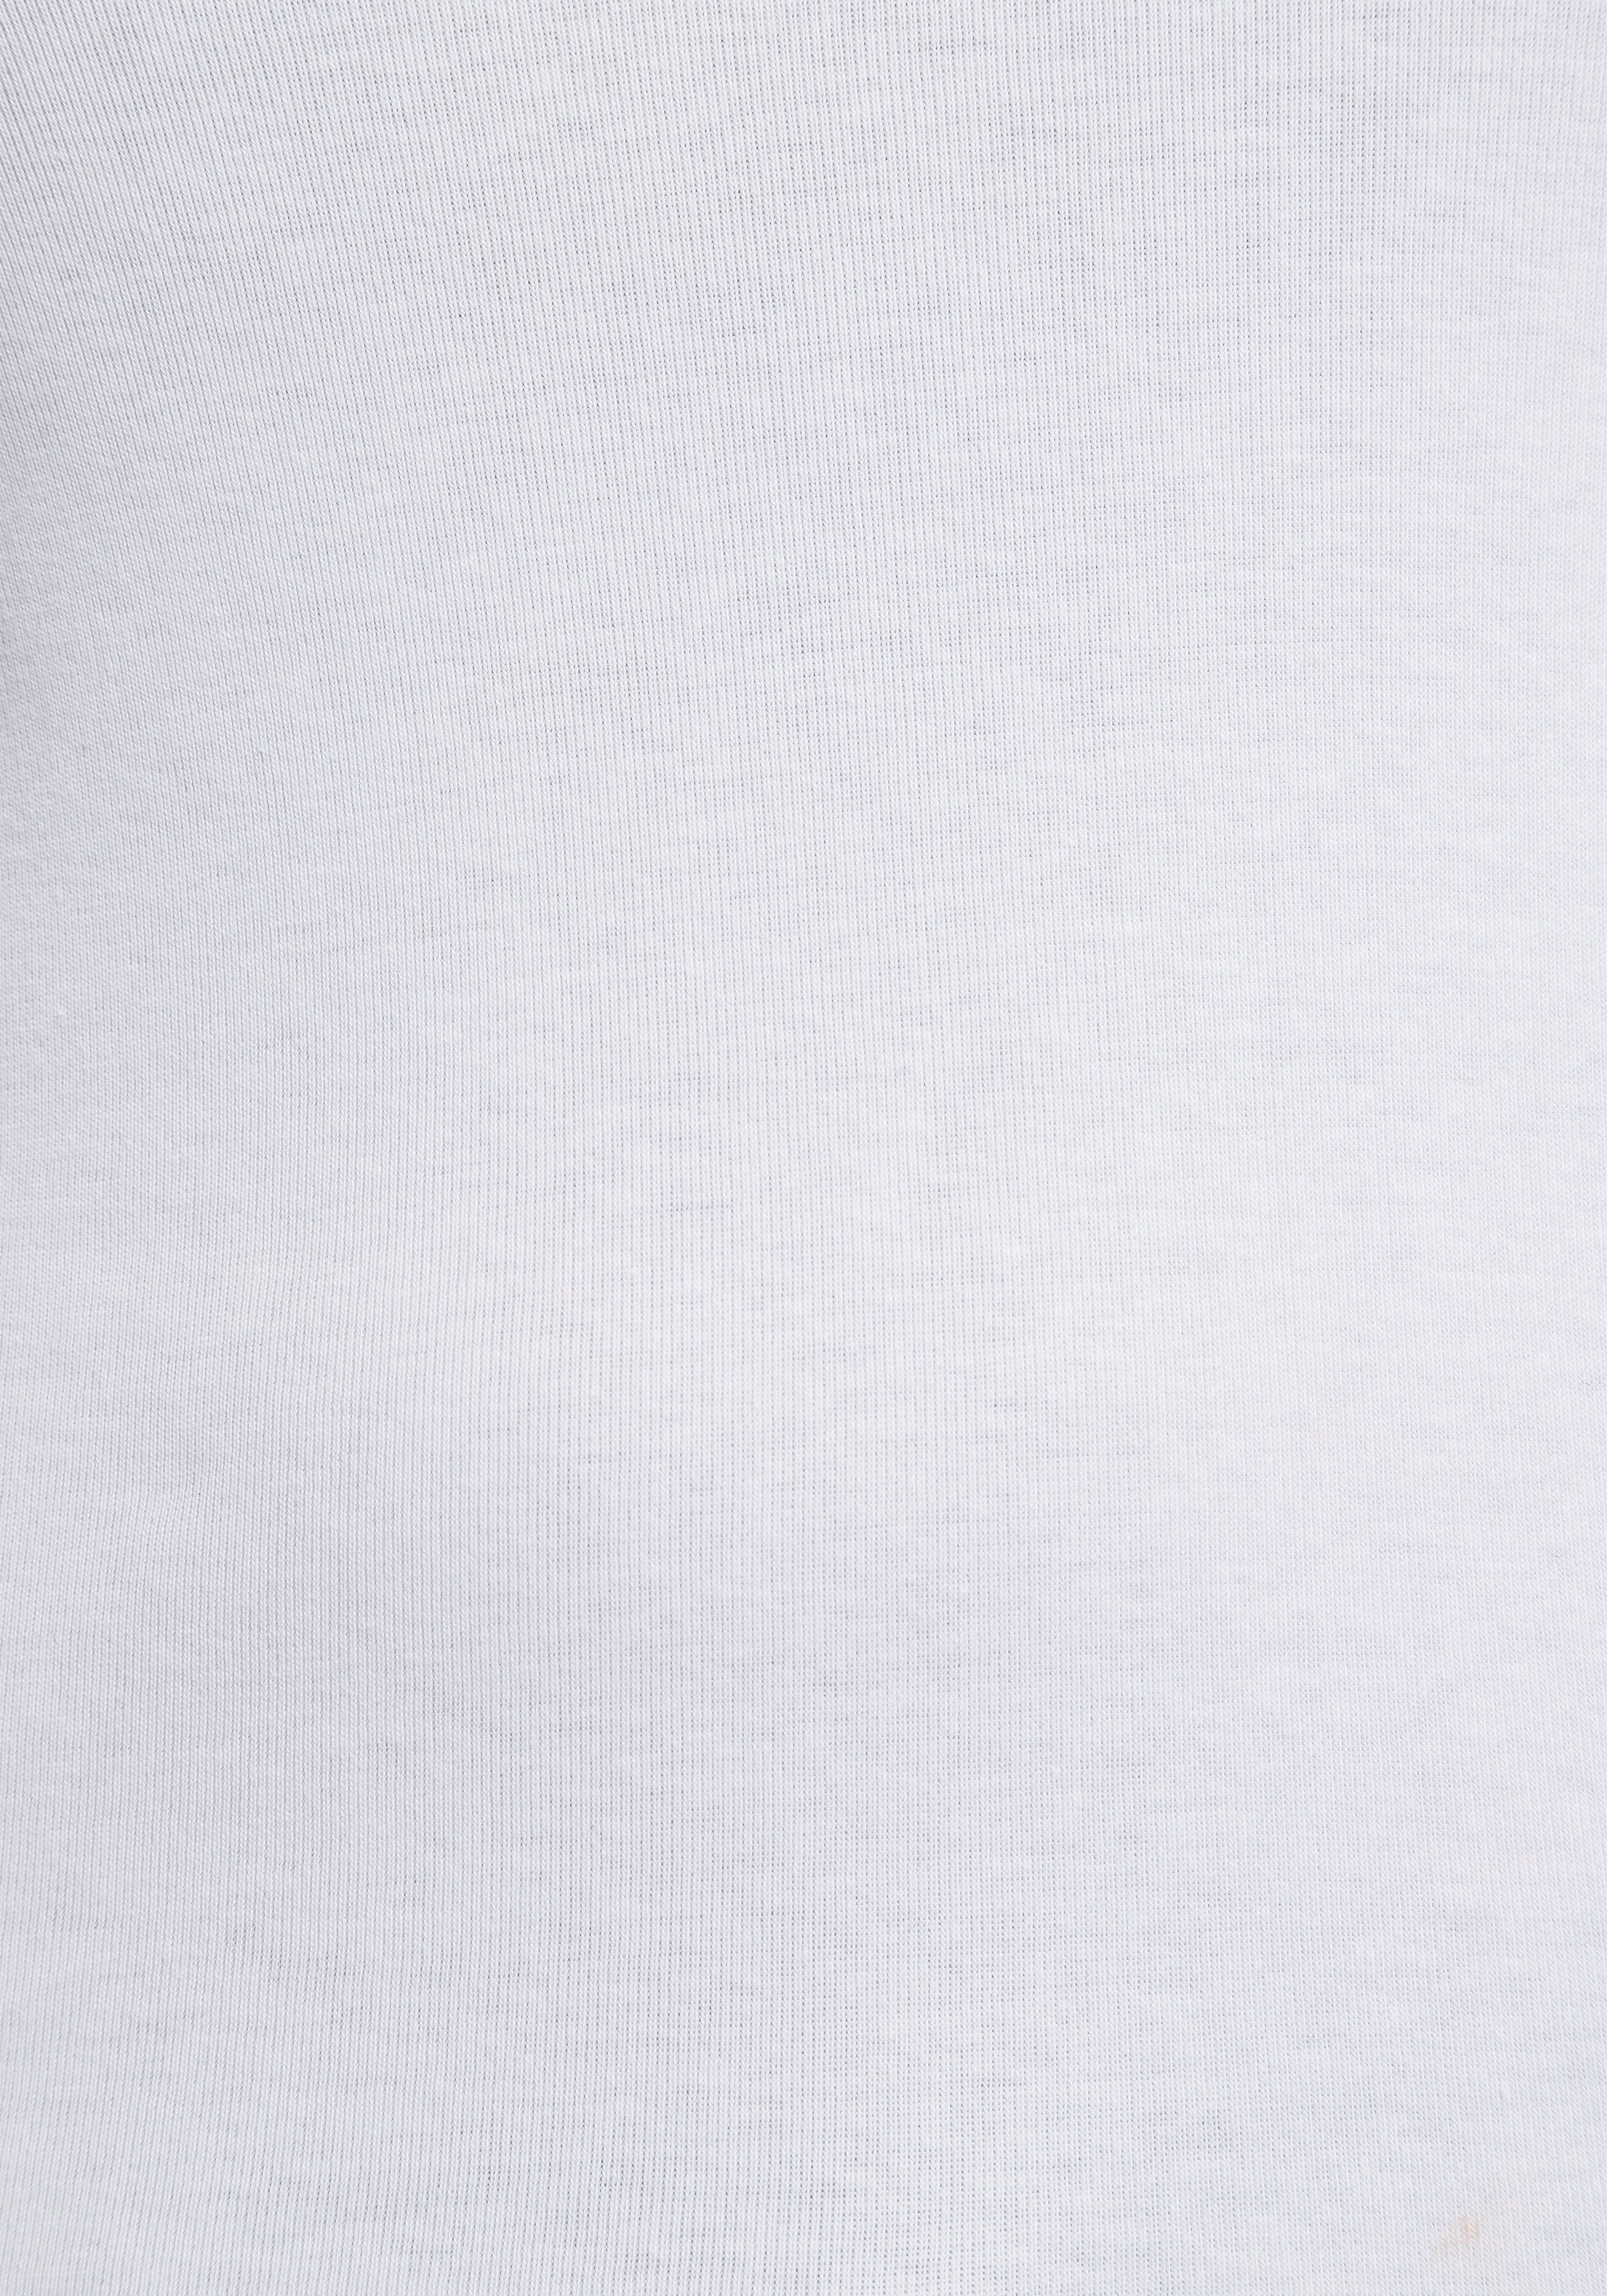 am 3/4-Arm-Shirt mit KangaROOS weiß-blau großem Markenschriftzug Arm